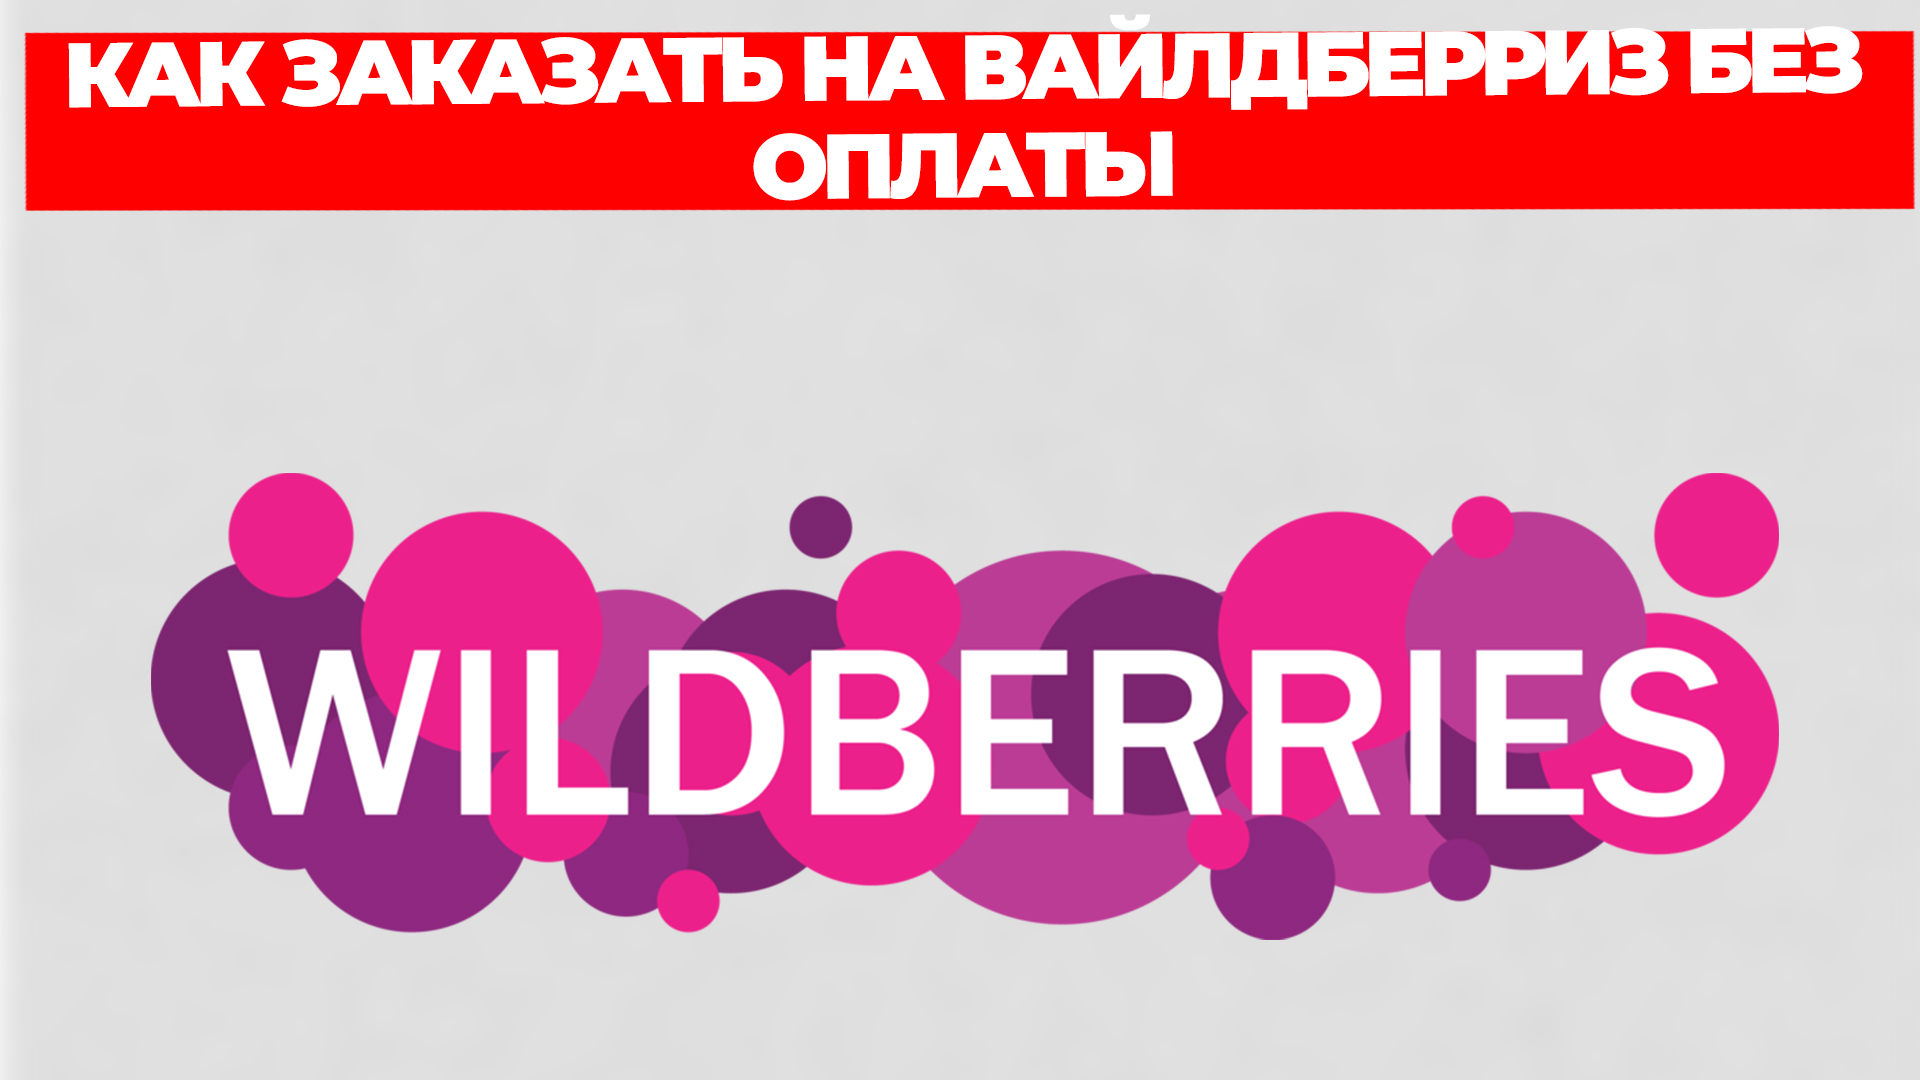 Вб валдберис. Вайлдберриз. Wildberries лого. Wildberries интернет магазин. Wildberries иконка.